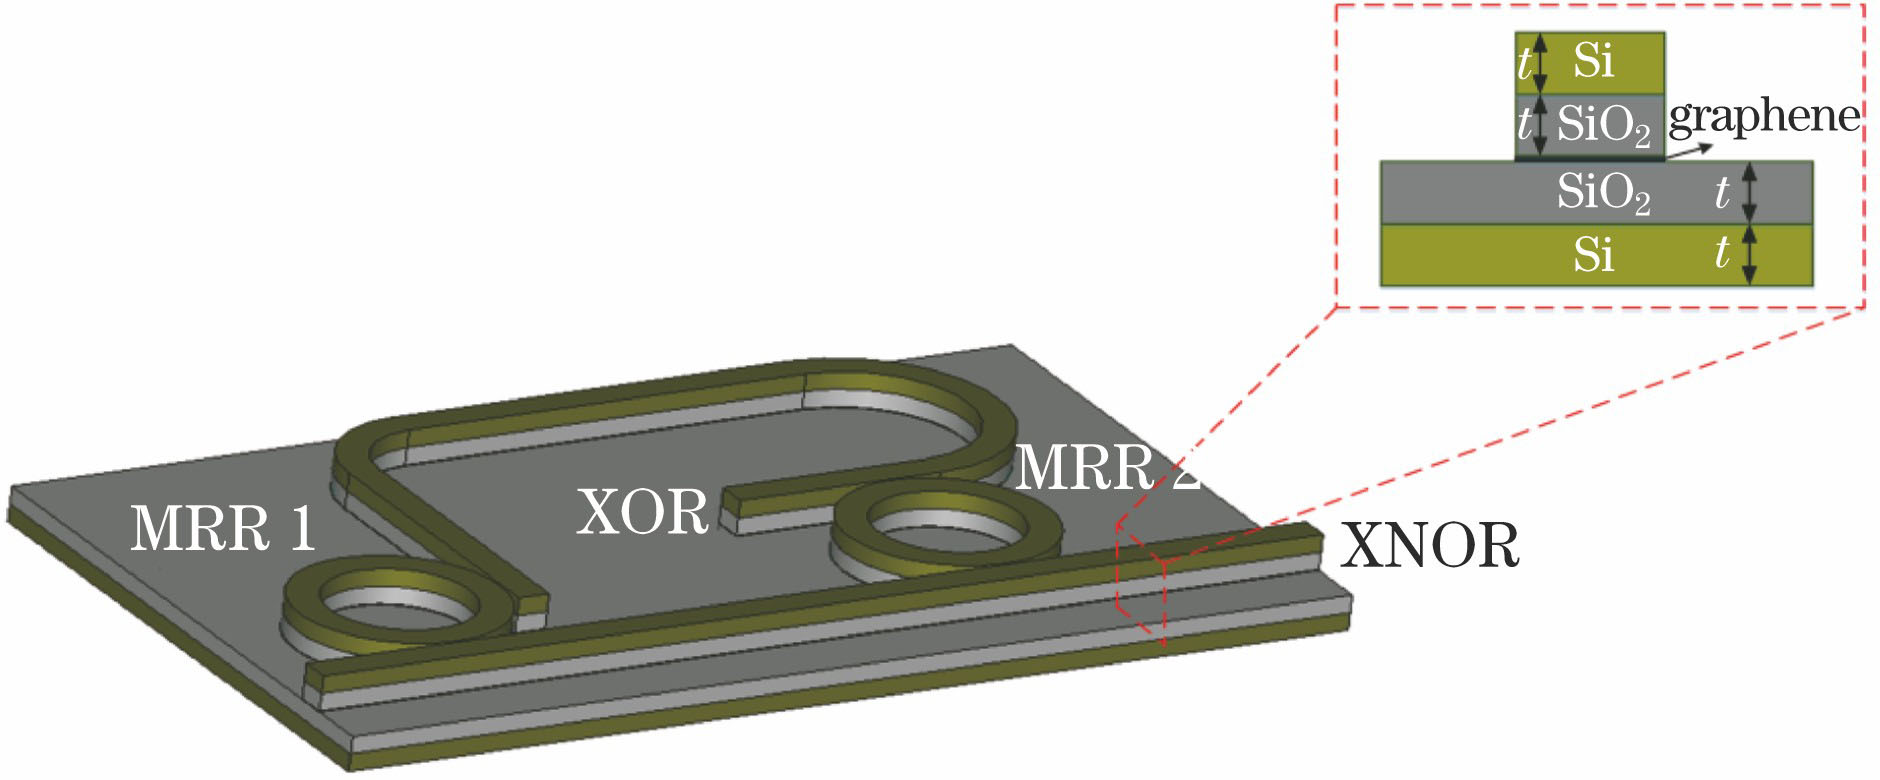 Structural diagram of graphene-based plasmonic XNOR/XOR logic gate